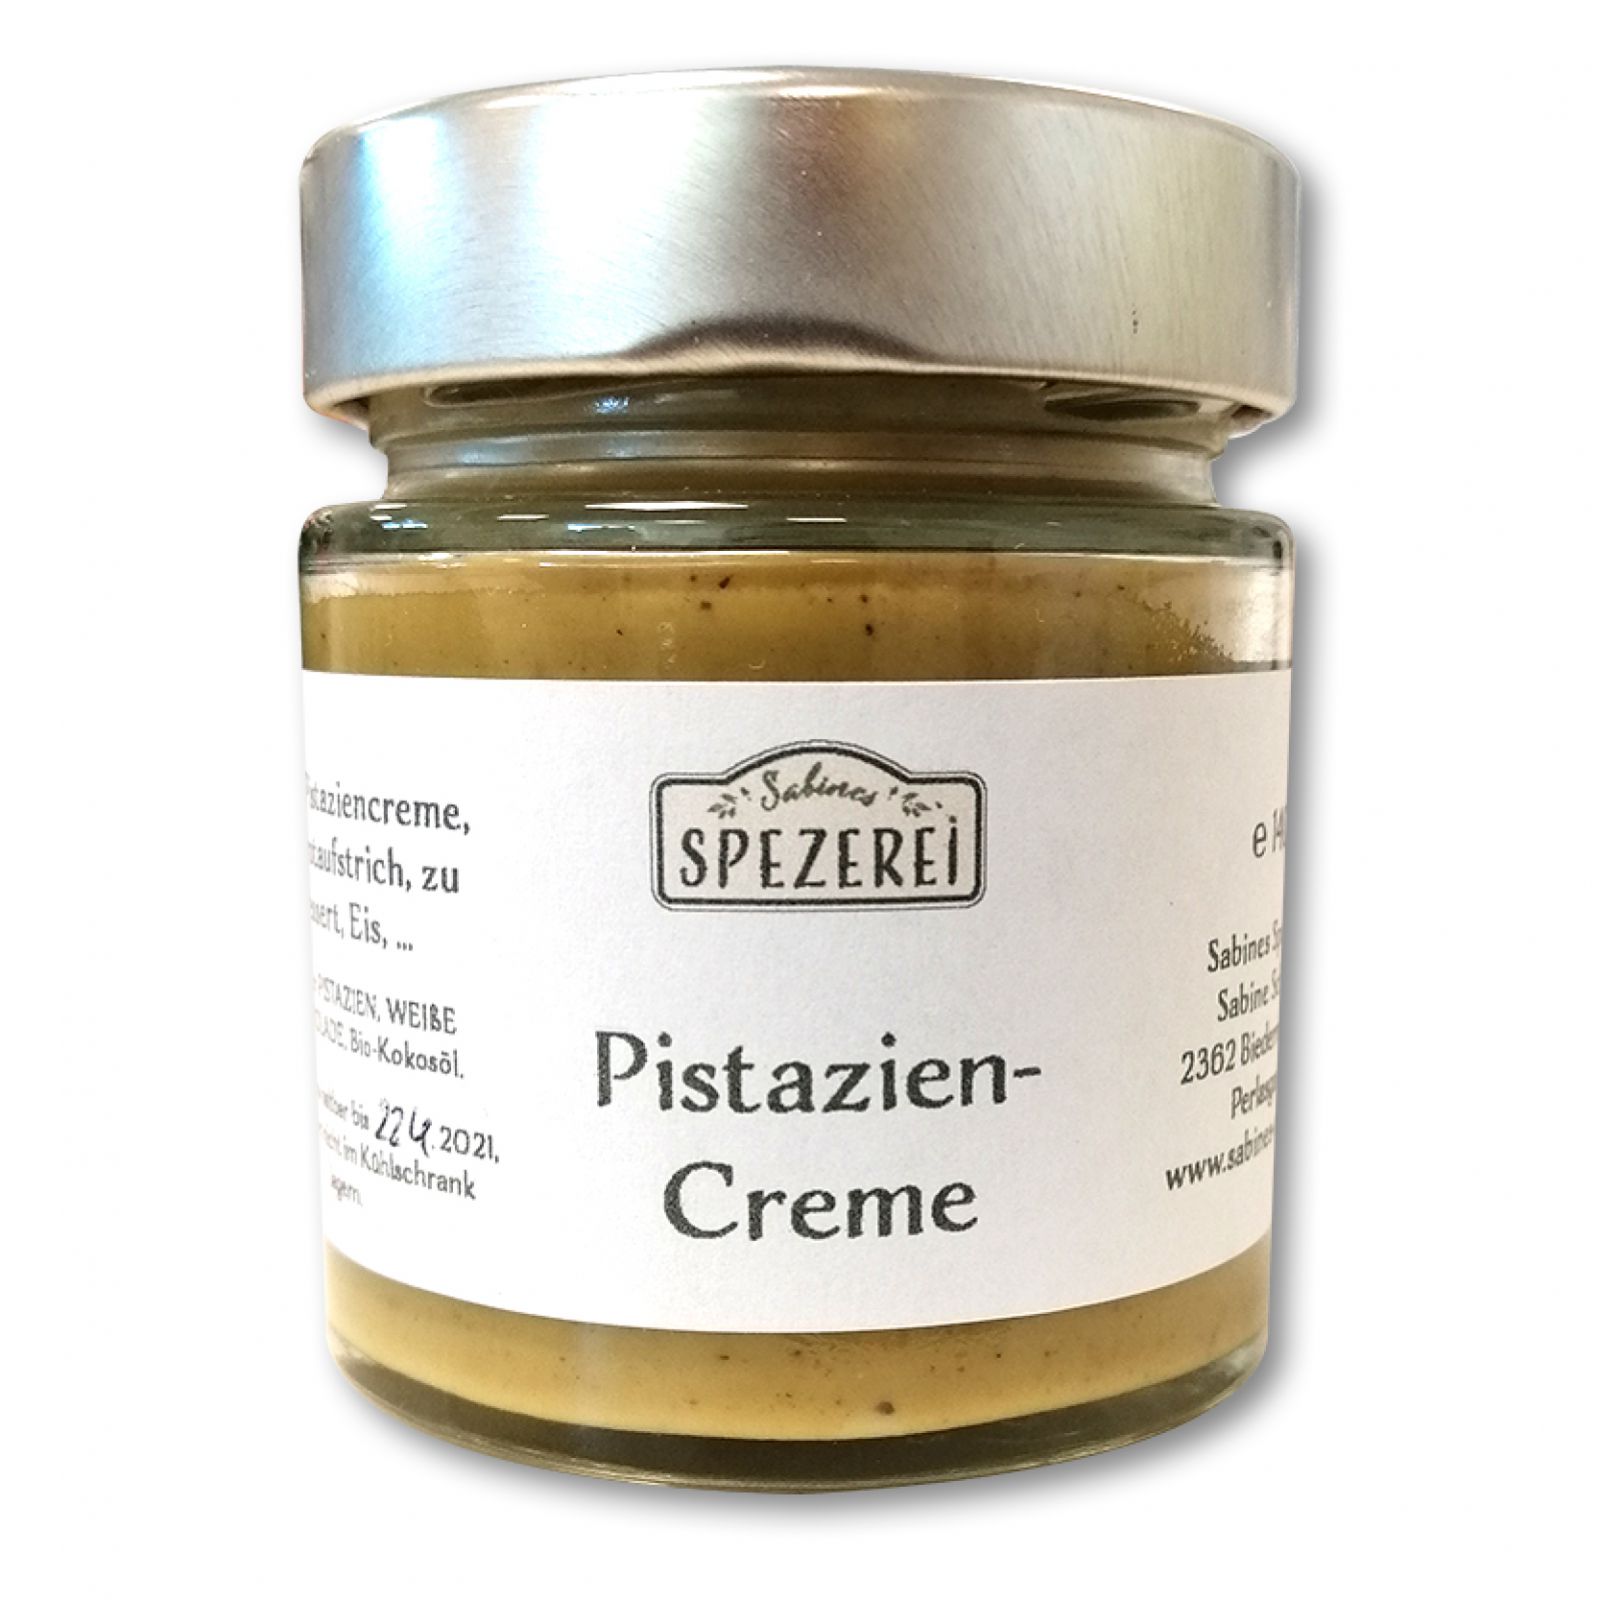 Pistazien-Creme - Sabines Spezerei - Bauernladen